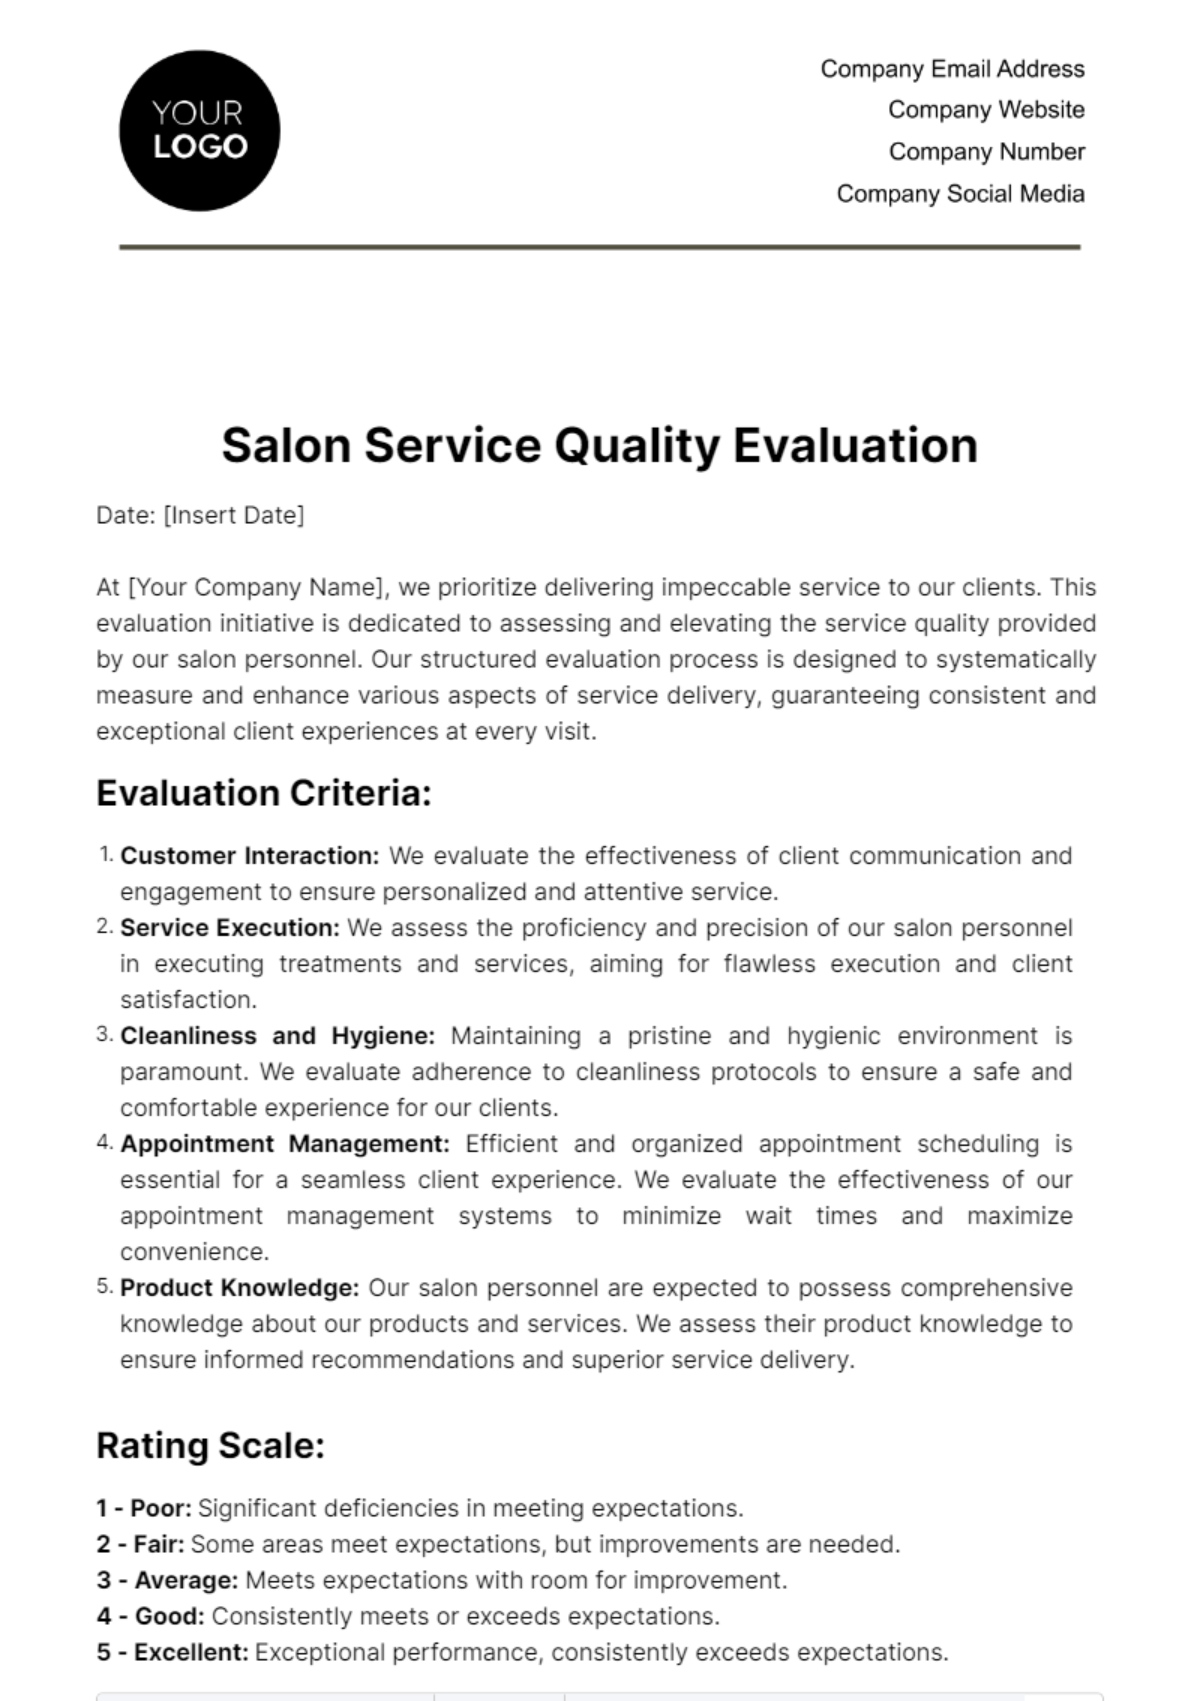 Free Salon Service Quality Evaluation Template